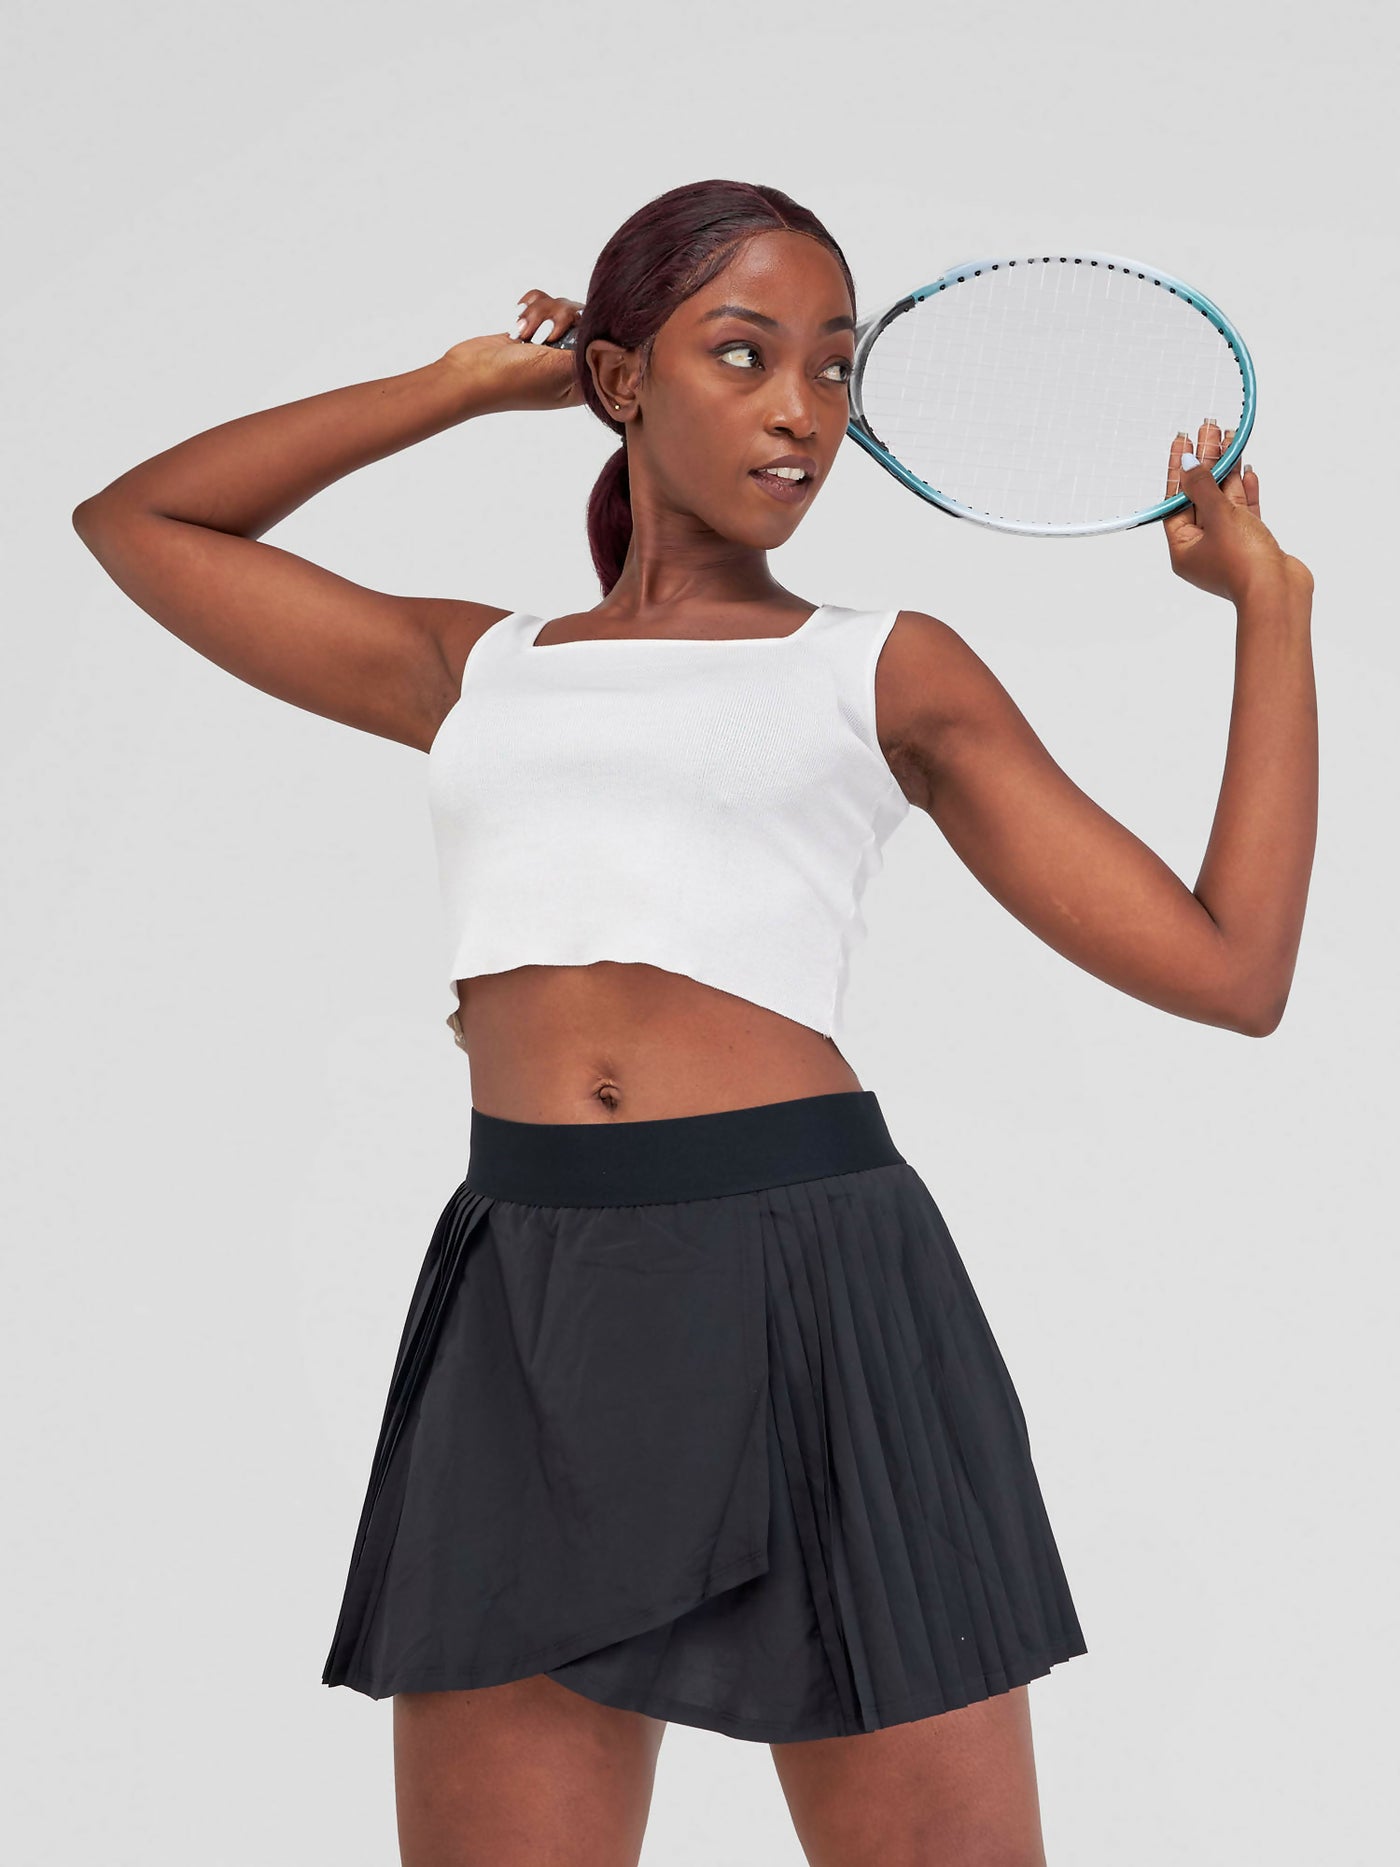 Flen Store Tennis Skirt With In-Built Shorts - Black